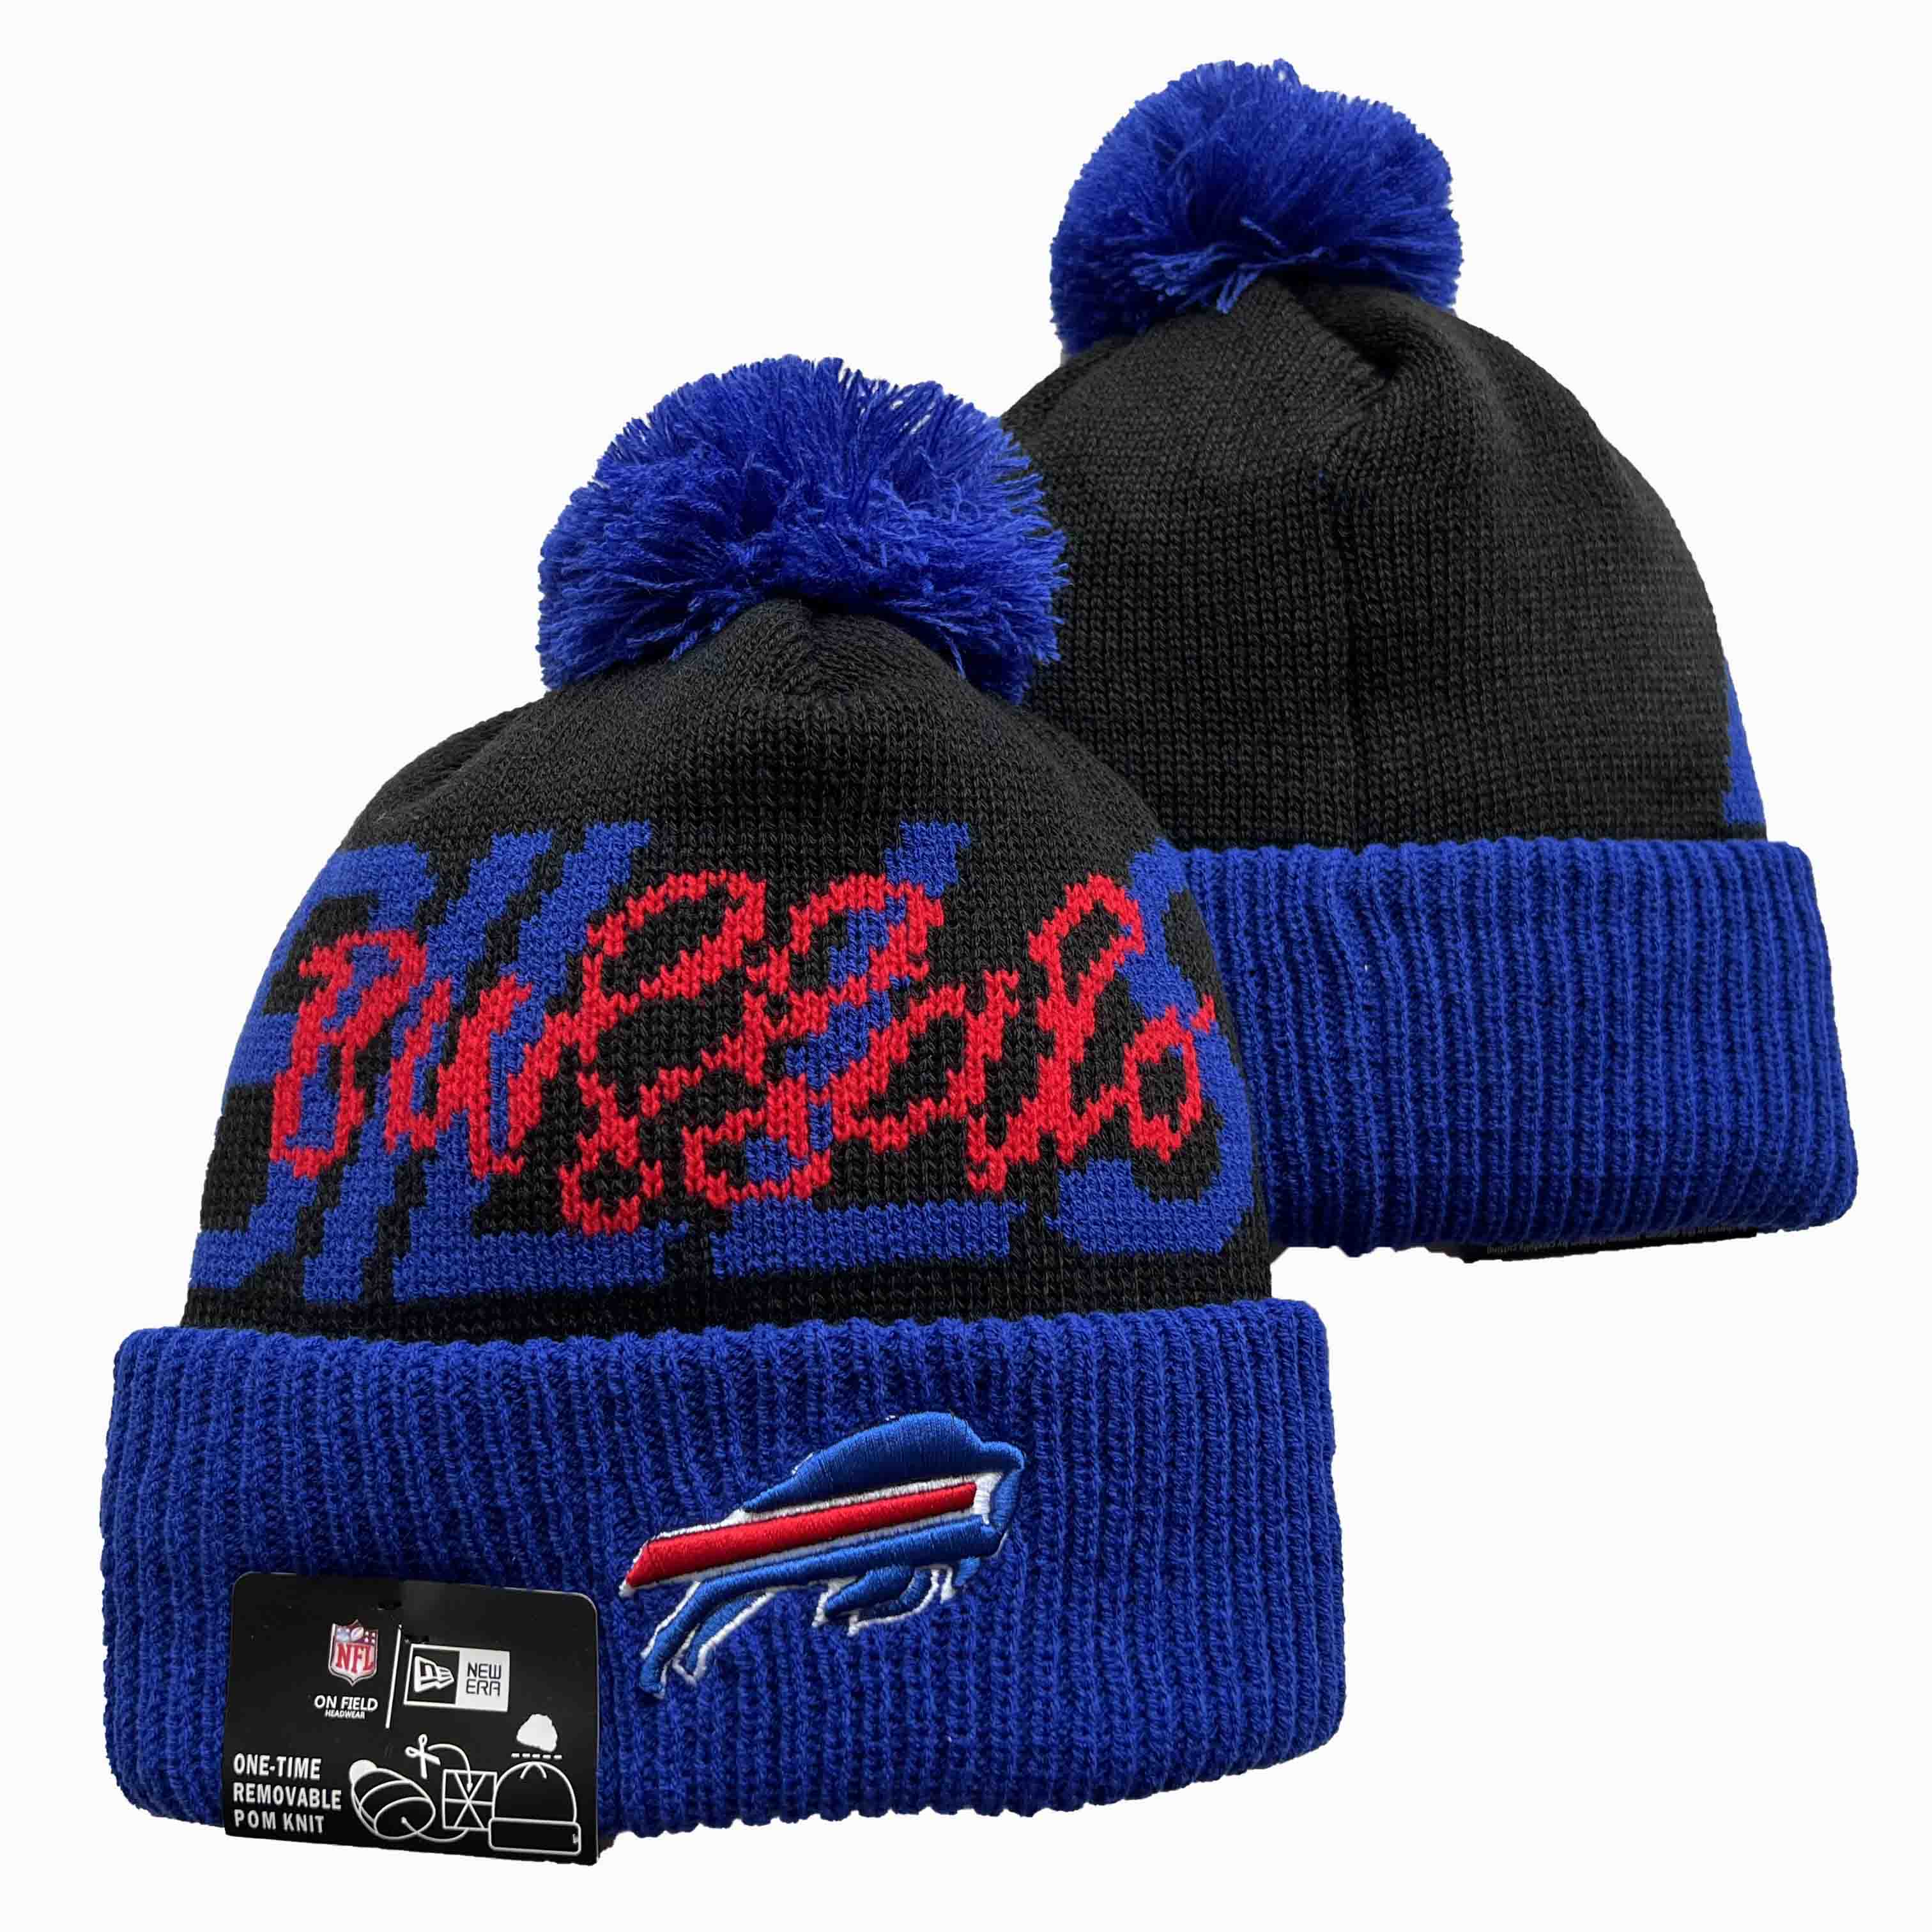 NFL Buffalo Bills Beanies Knit Hats-YD912